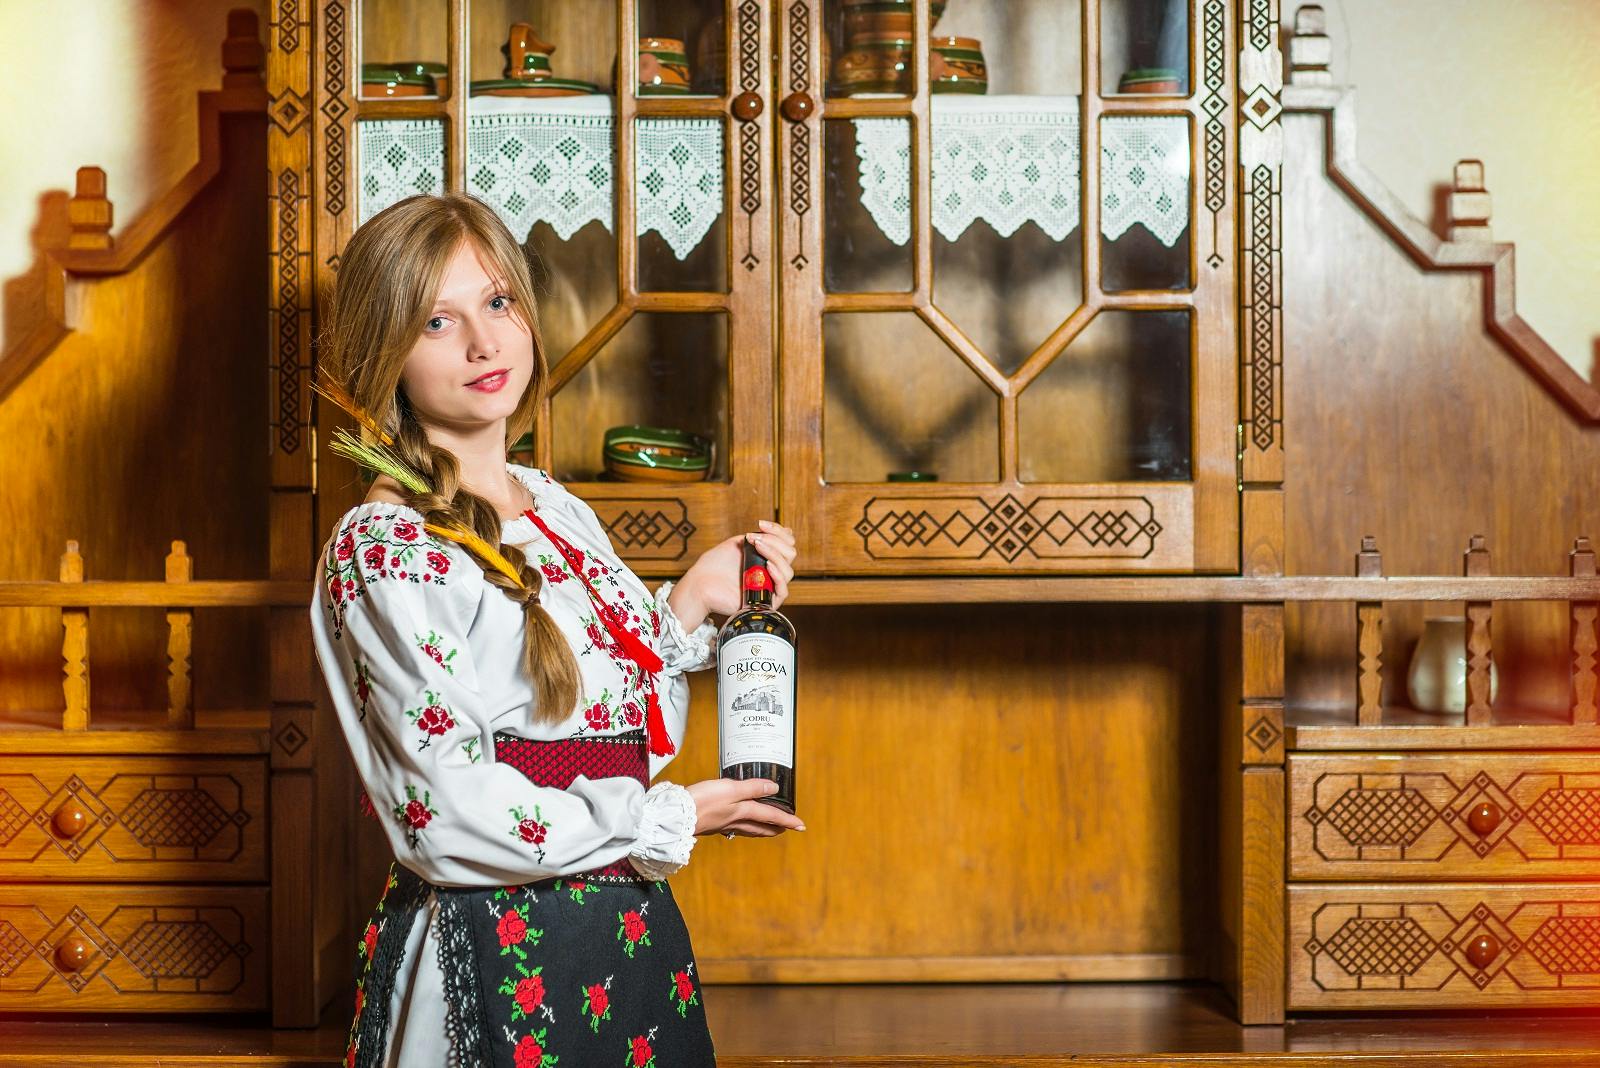 Tour del vino Cricova desde Chisinau con degustación